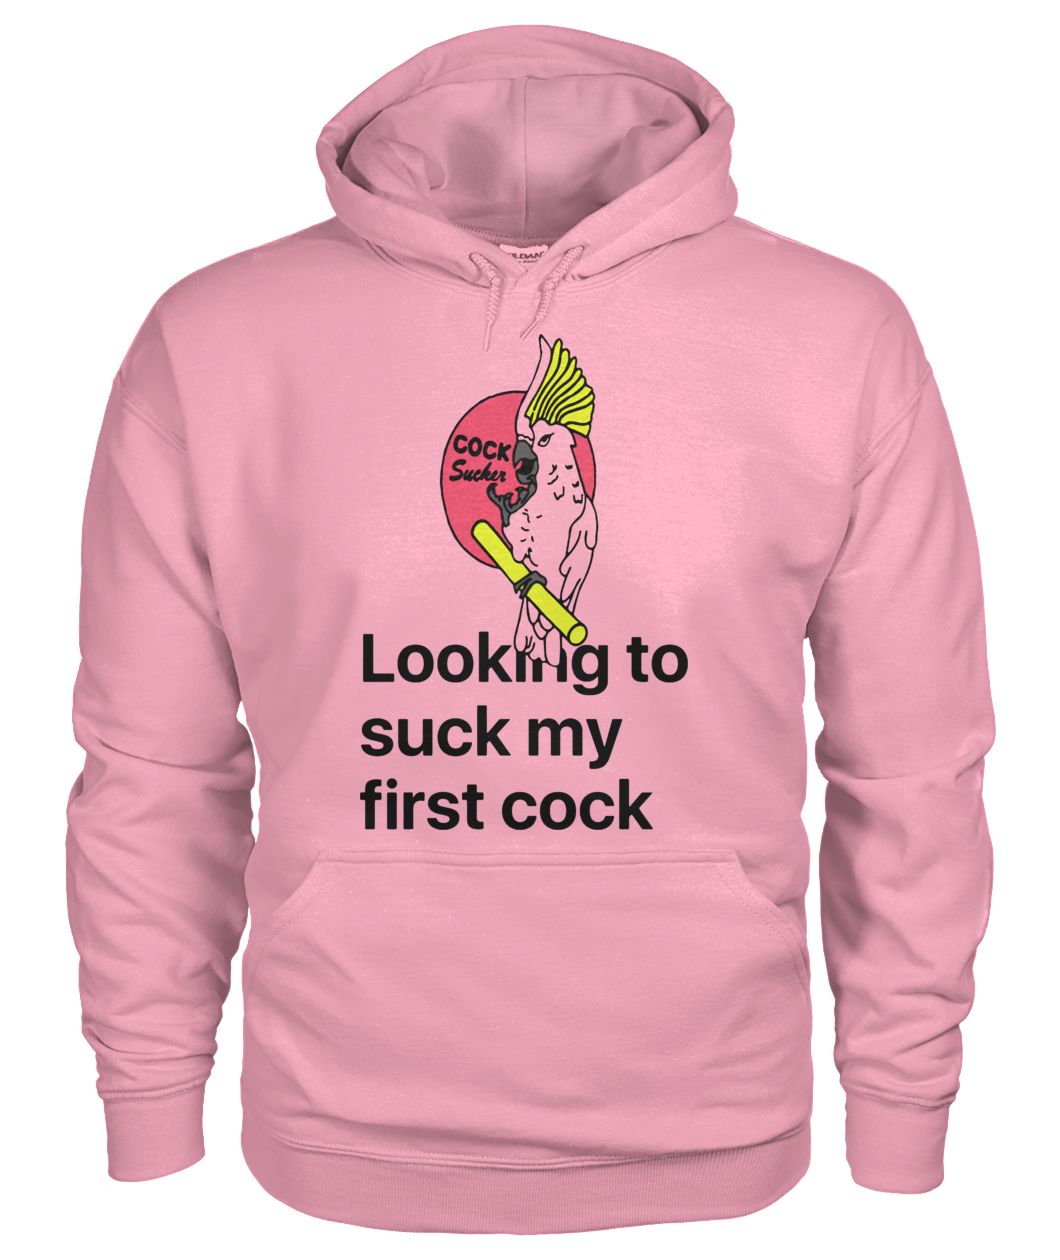 Looking to suck my first cock gildan hoodie